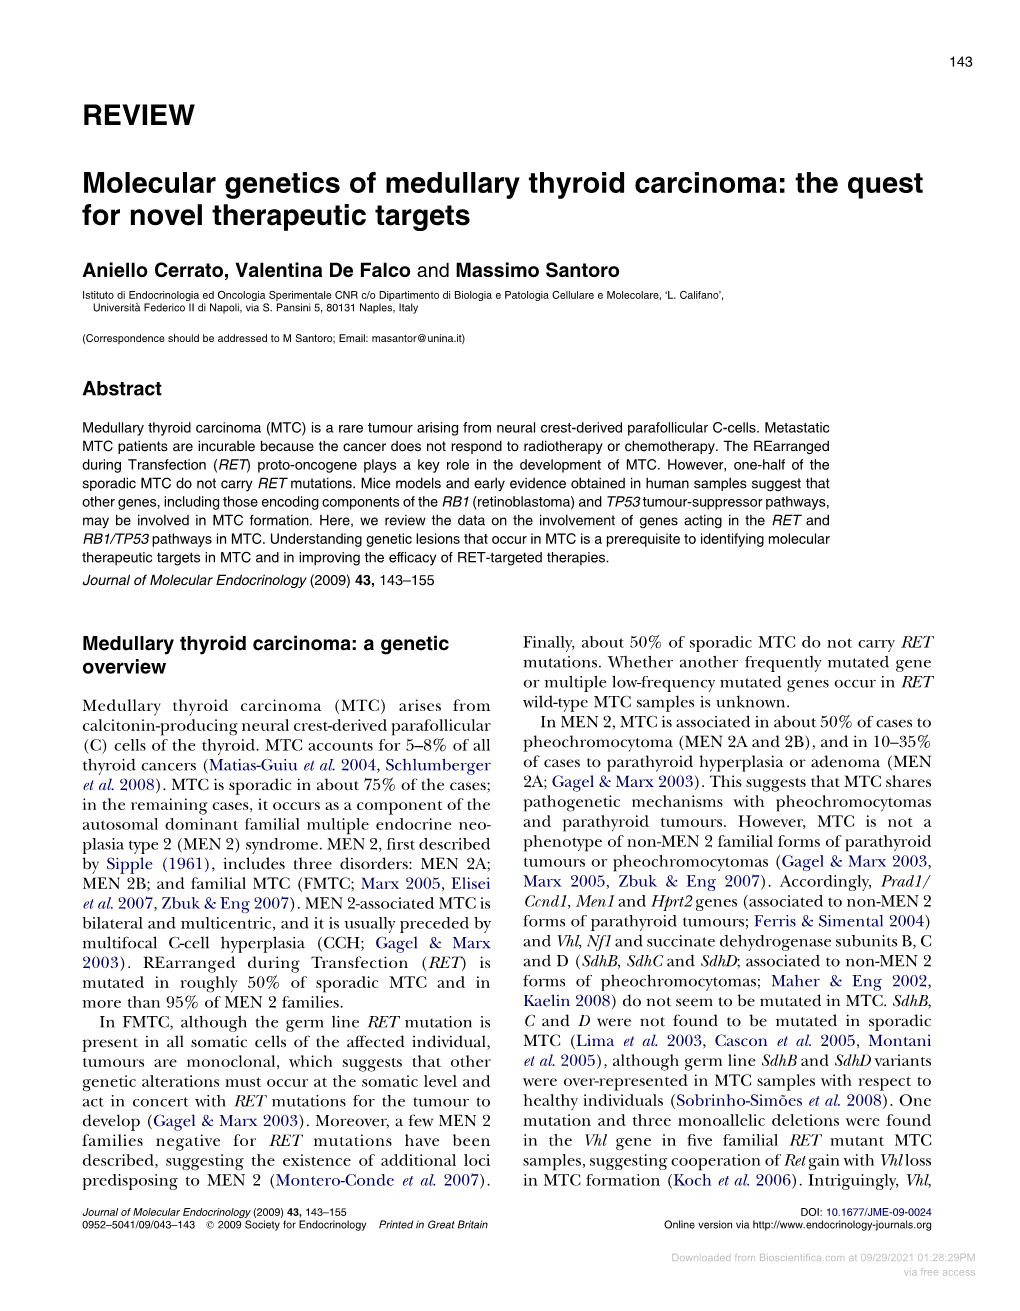 REVIEW Molecular Genetics of Medullary Thyroid Carcinoma: The